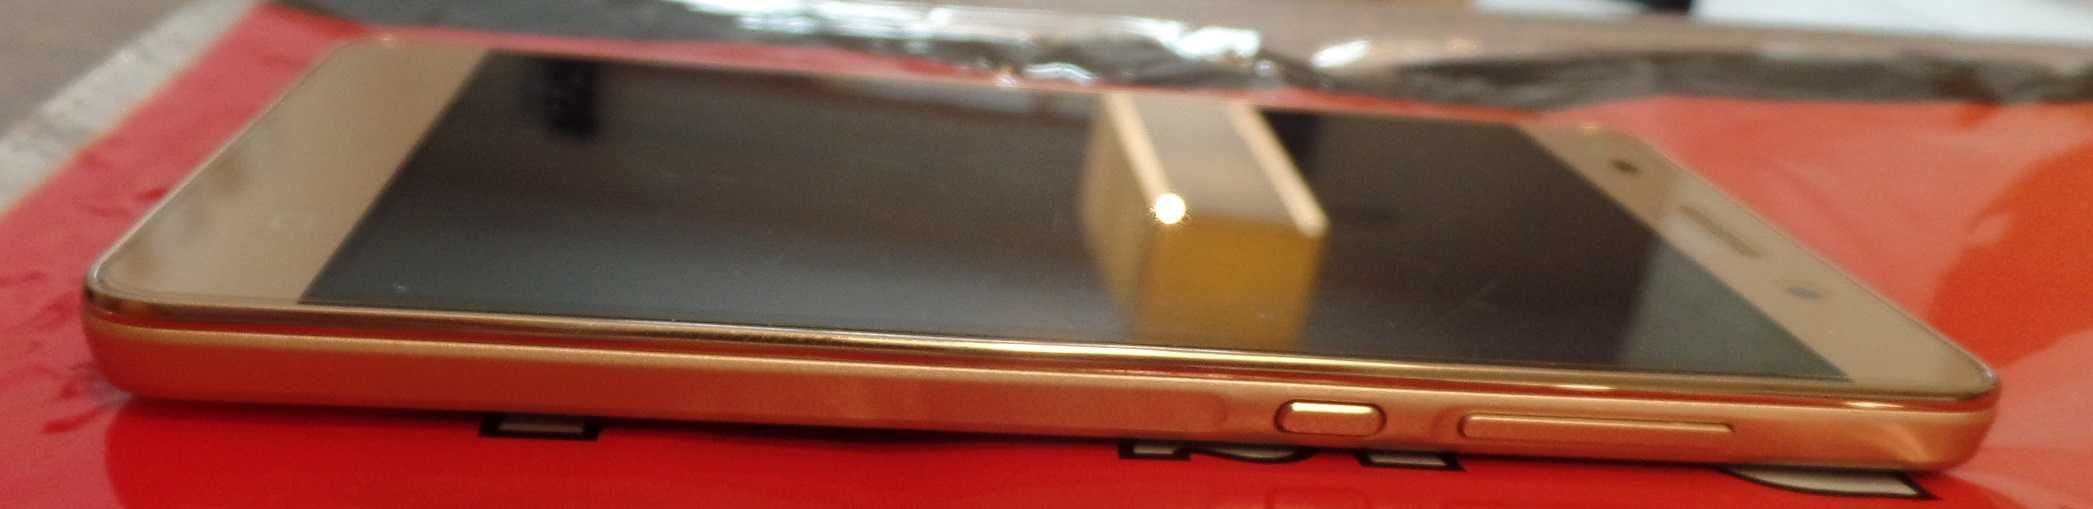 Telemóvel Huawei G650 G Play Mini Dual SIM Dourado (113)